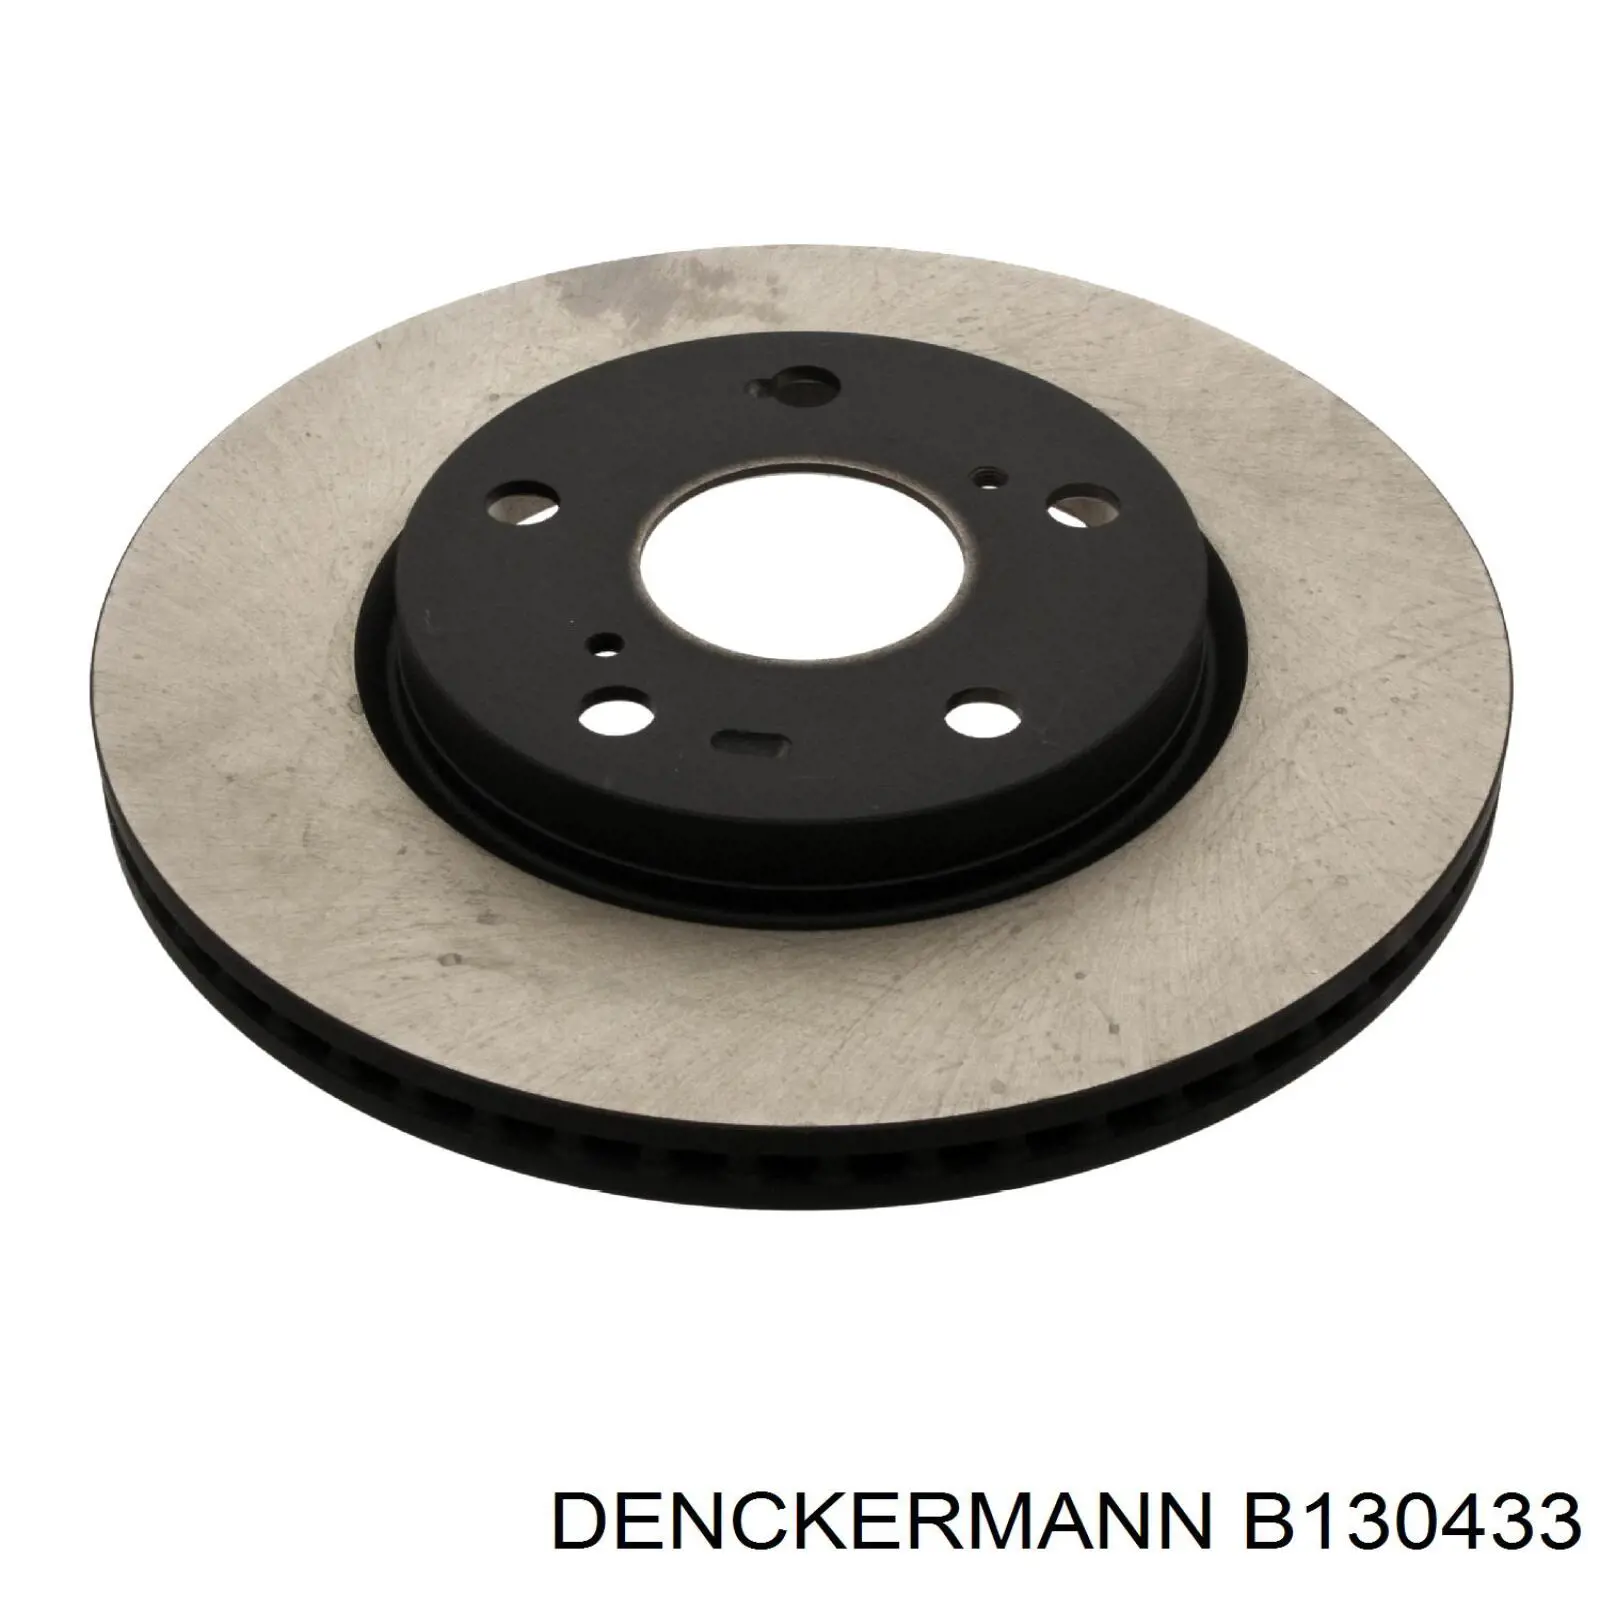 B130433 Denckermann disco do freio dianteiro